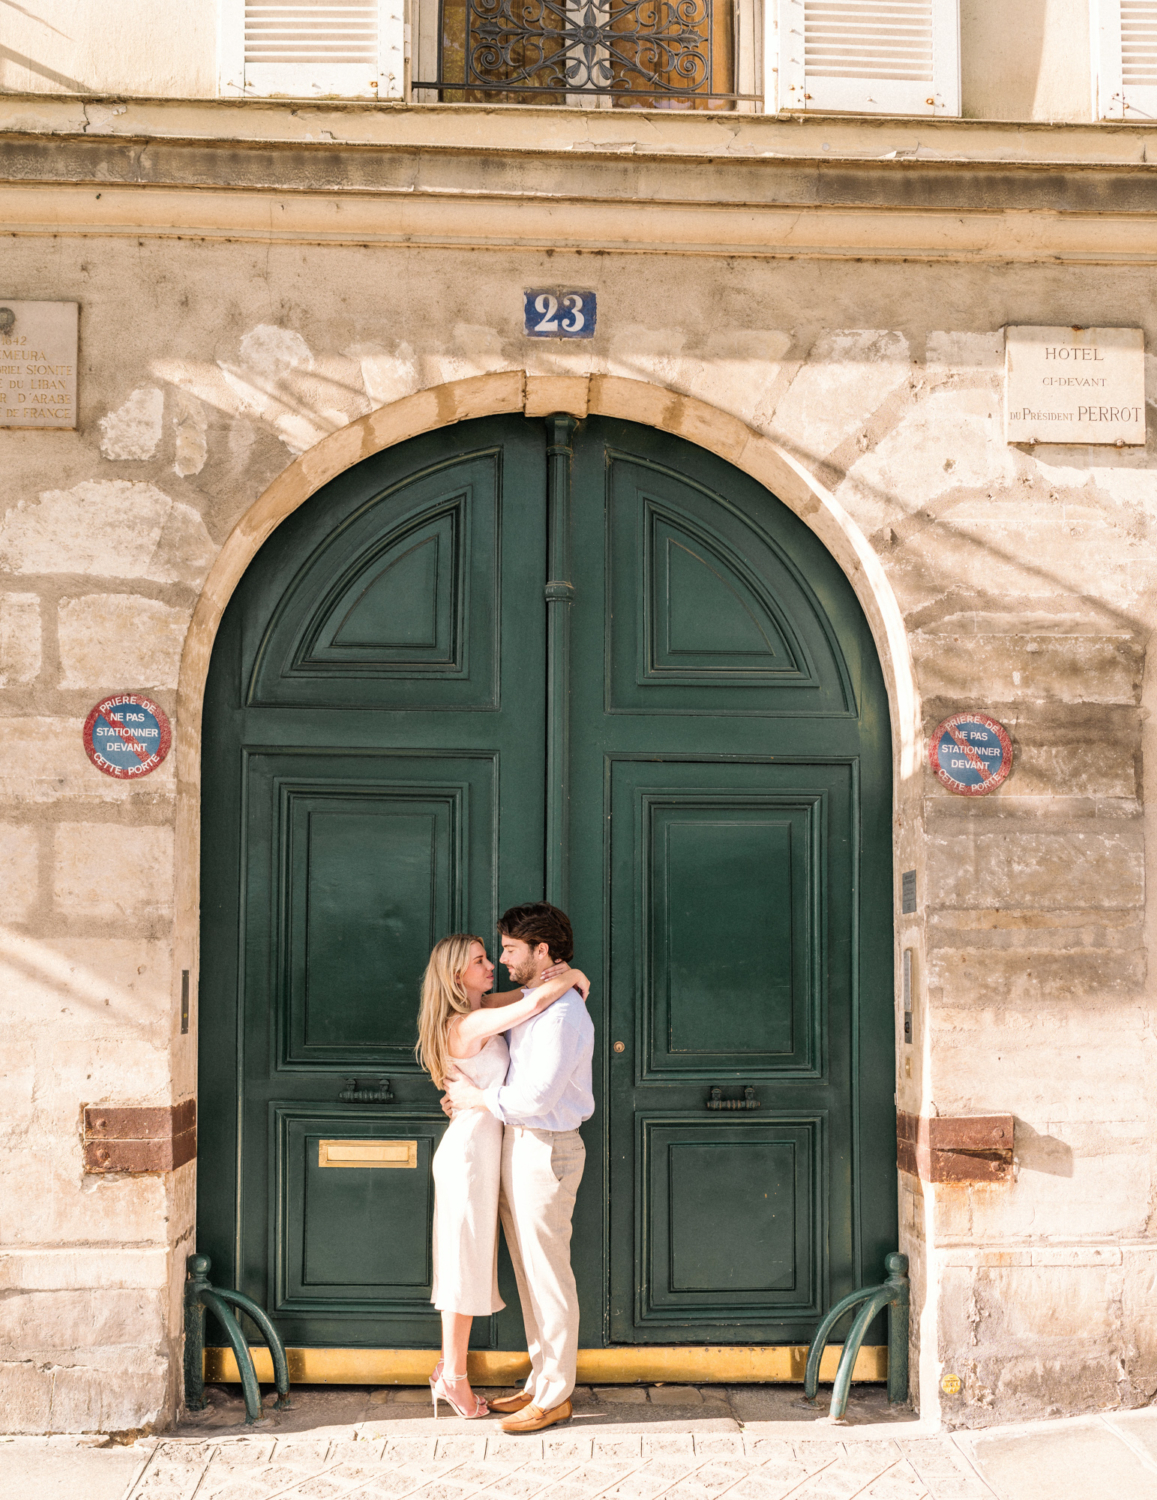 engaged young couple hug in front of green door in paris